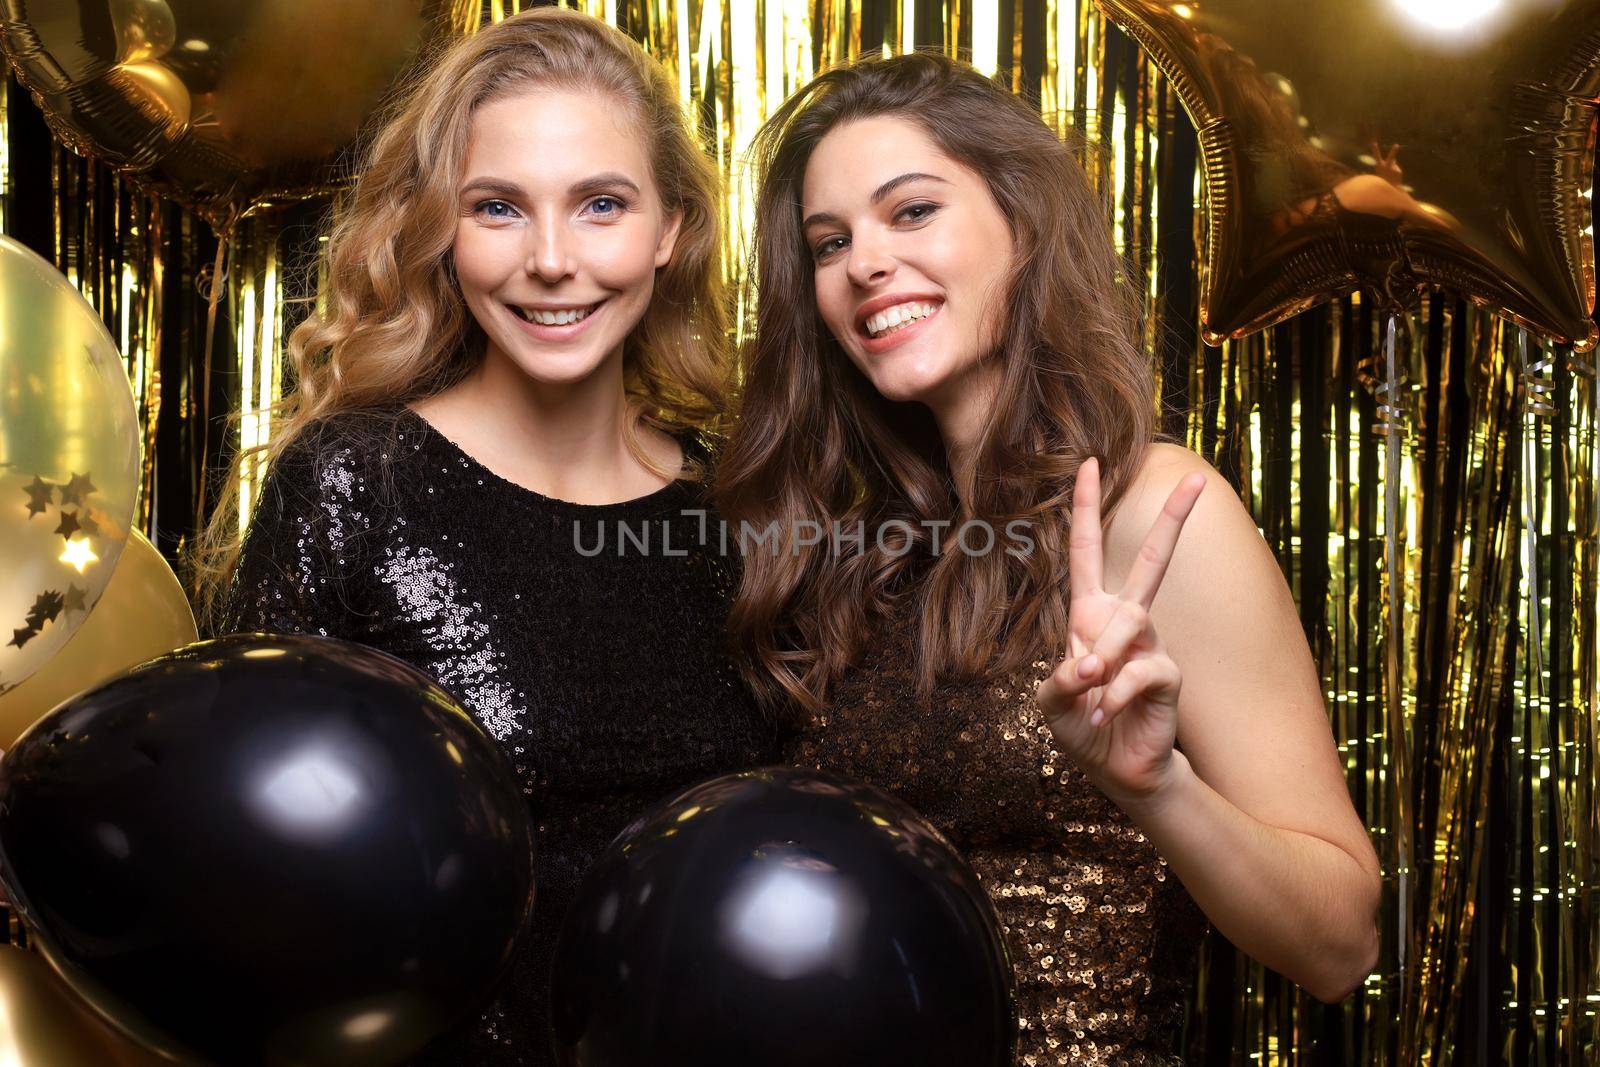 Beautiful girls celebrating New Year. Gorgeous smiling young women enjoying party celebration, having fun together